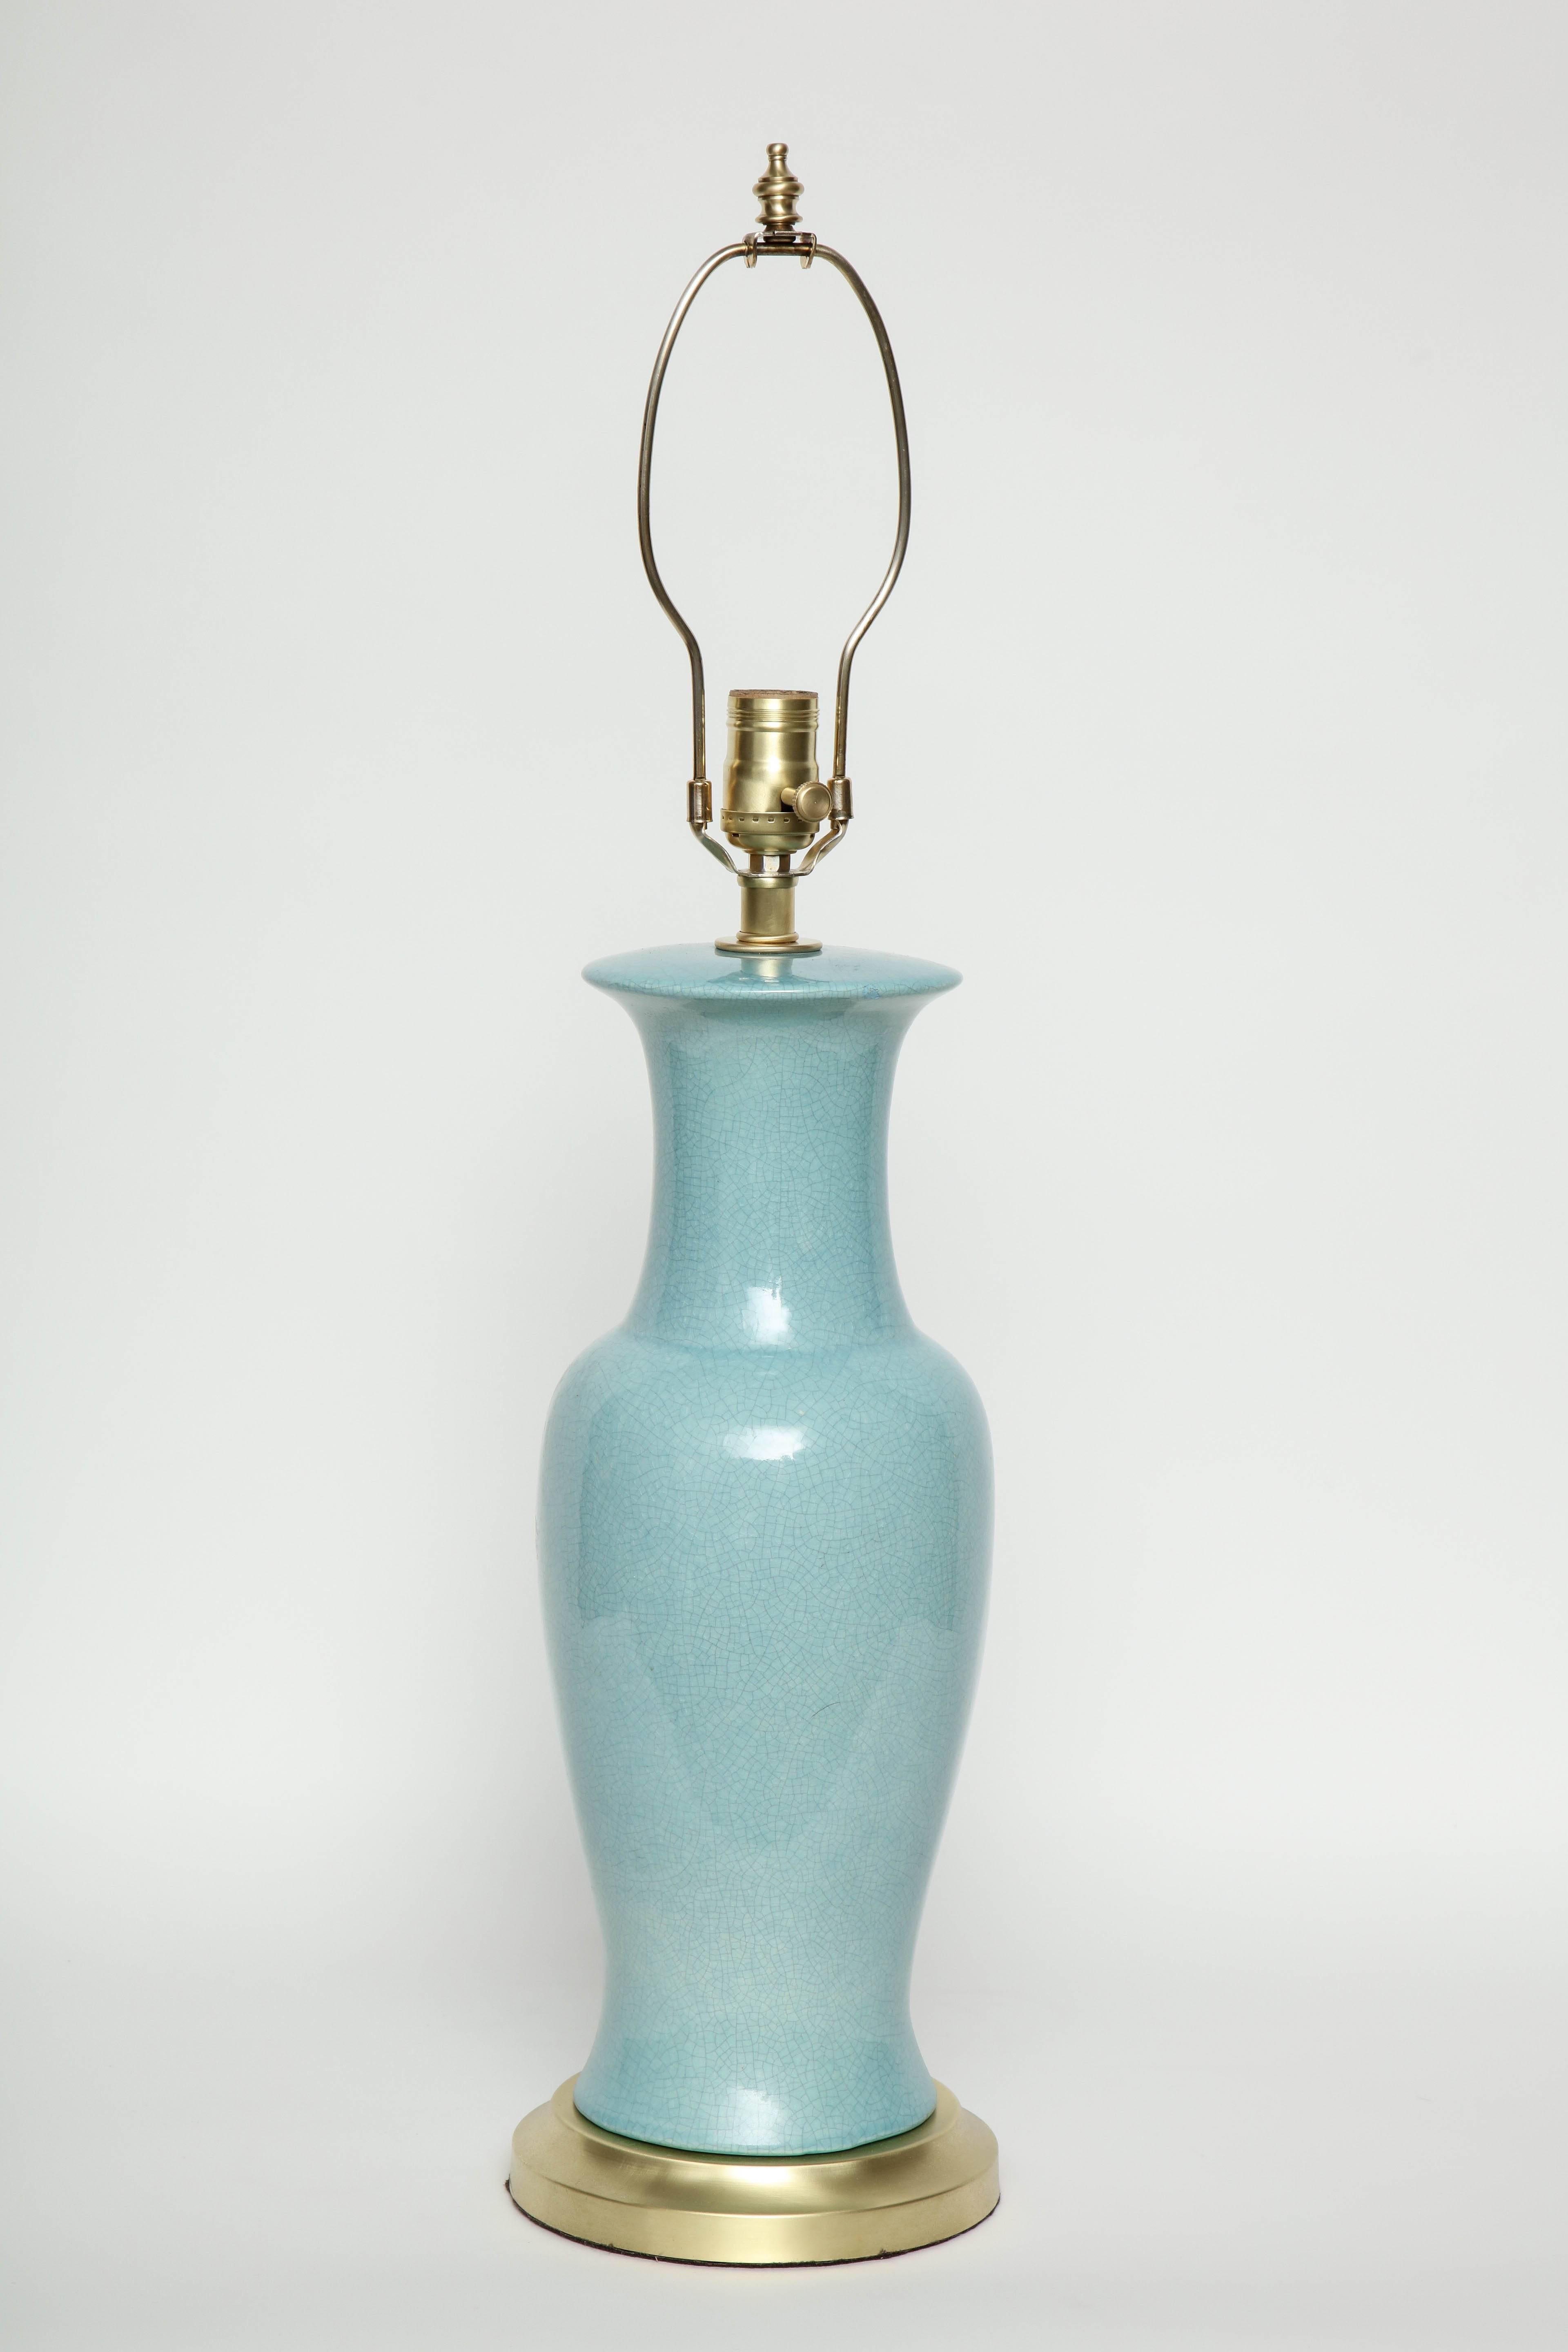 American Classical Paul Hanson Robins Egg Blue Porcelain Lamps